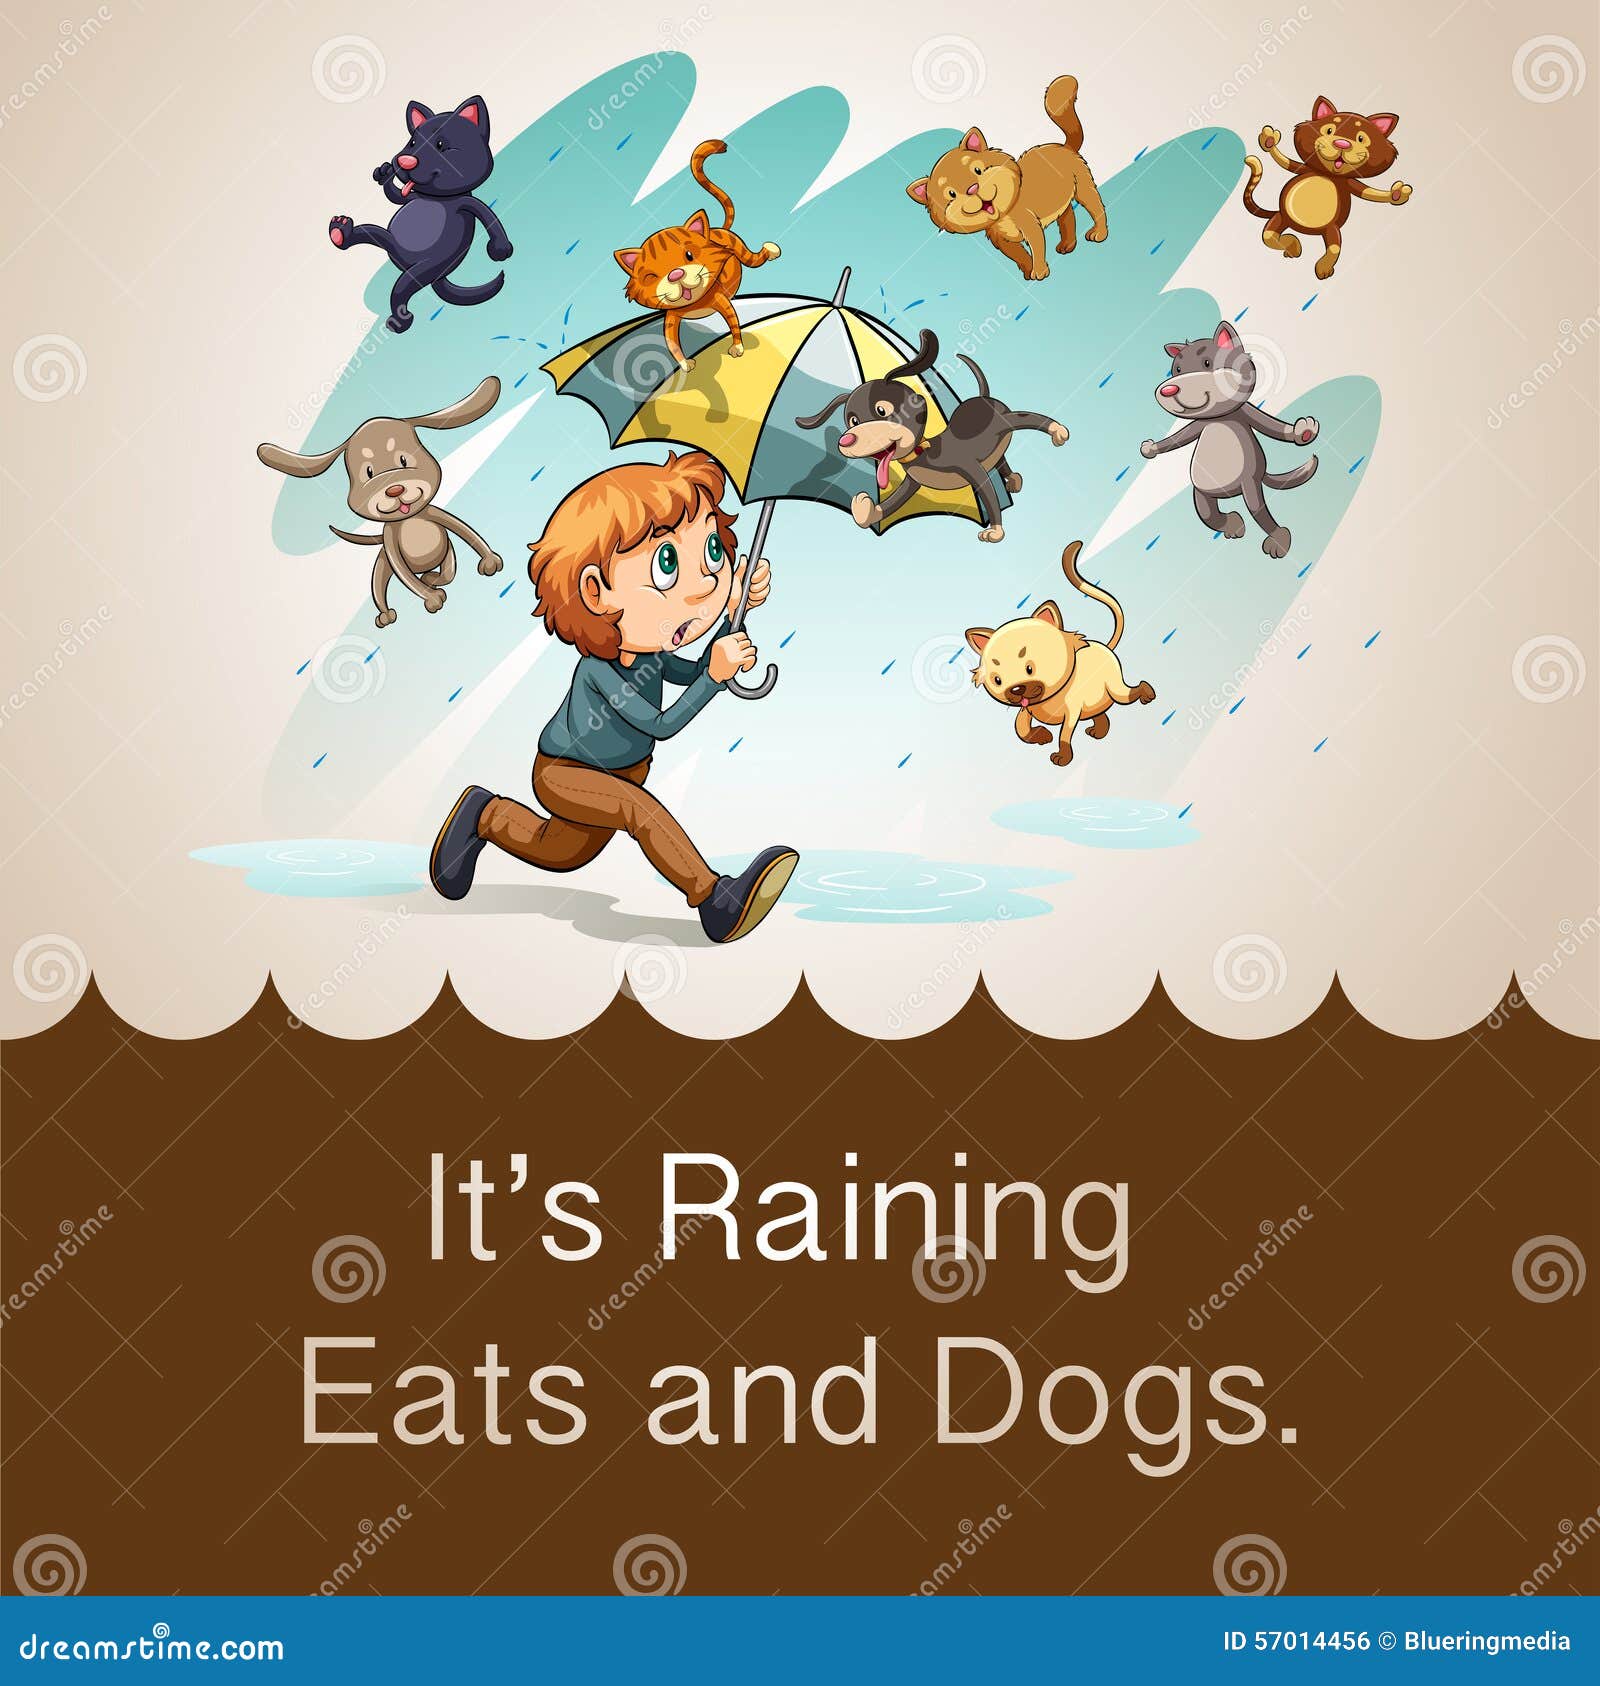 It is raining early. Идиомы raining Cats and Dogs. Raining Cats and Dogs идиома. Rain Cats and Dogs идиома. It is raining Cats and Dogs.